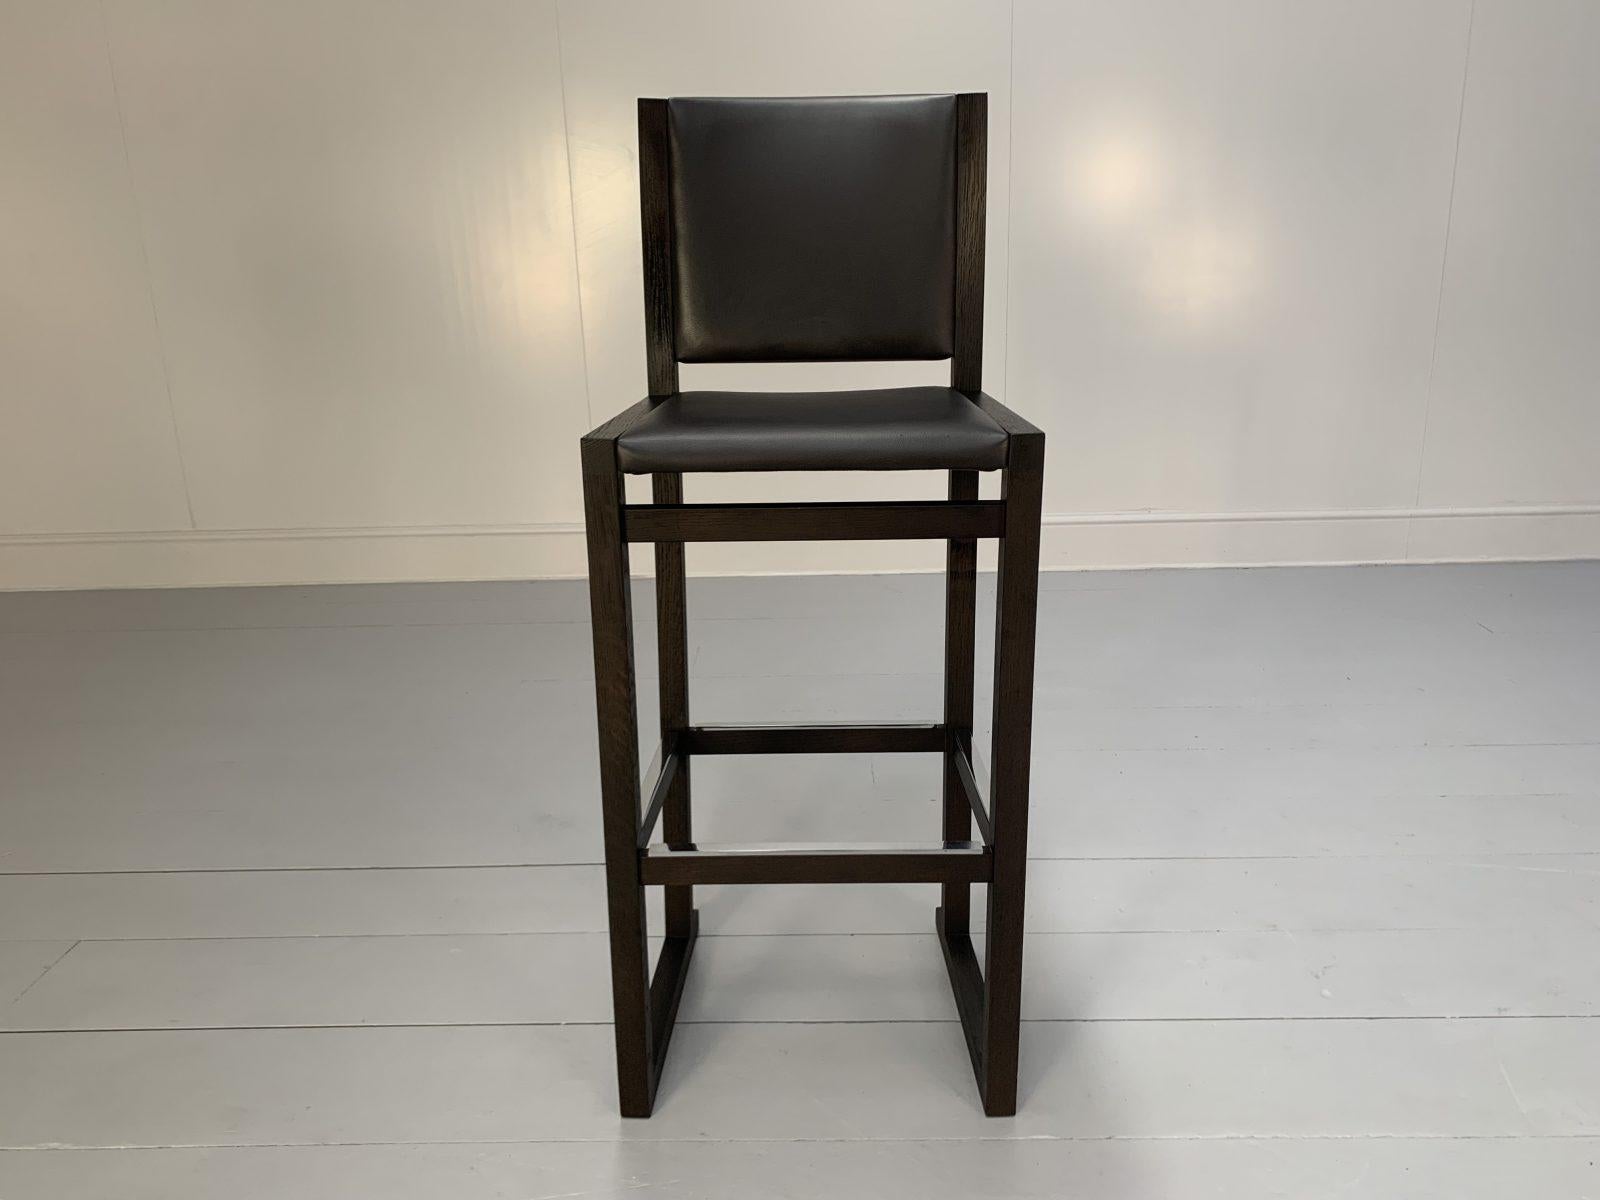 Pair of B&B Italia “Musa SM46G” Tall Bar Stool Chairs – In Dark Grey “Kasia” Lea For Sale 1